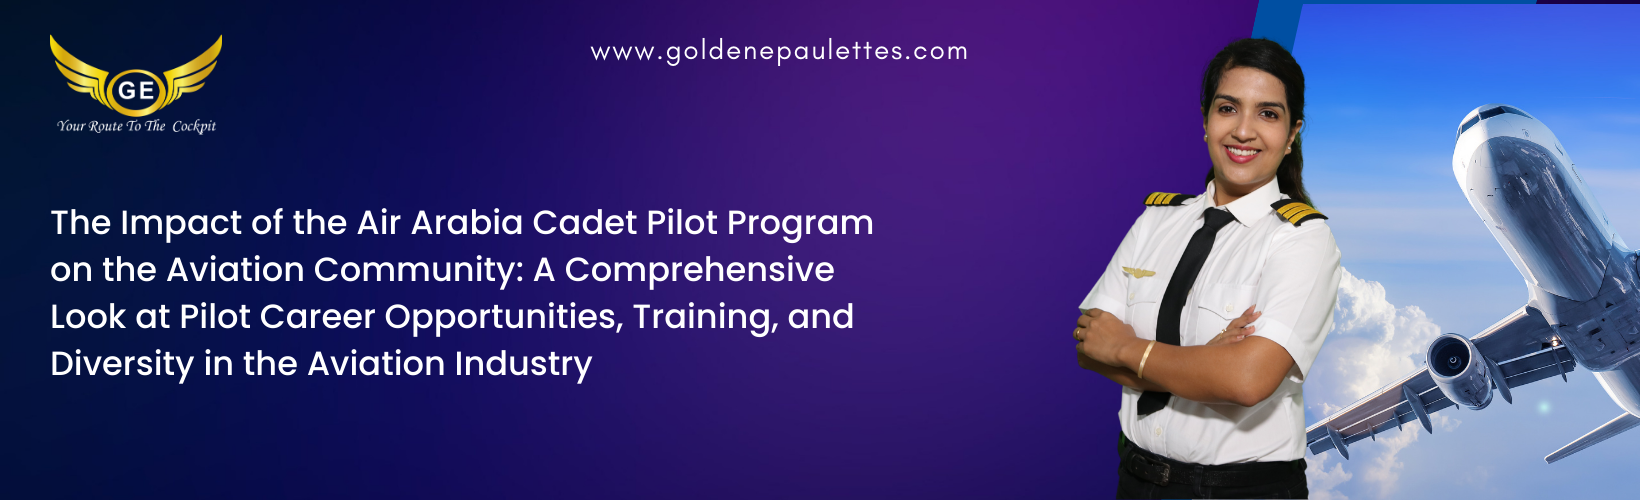 SpiceJet Cadet Pilot Program